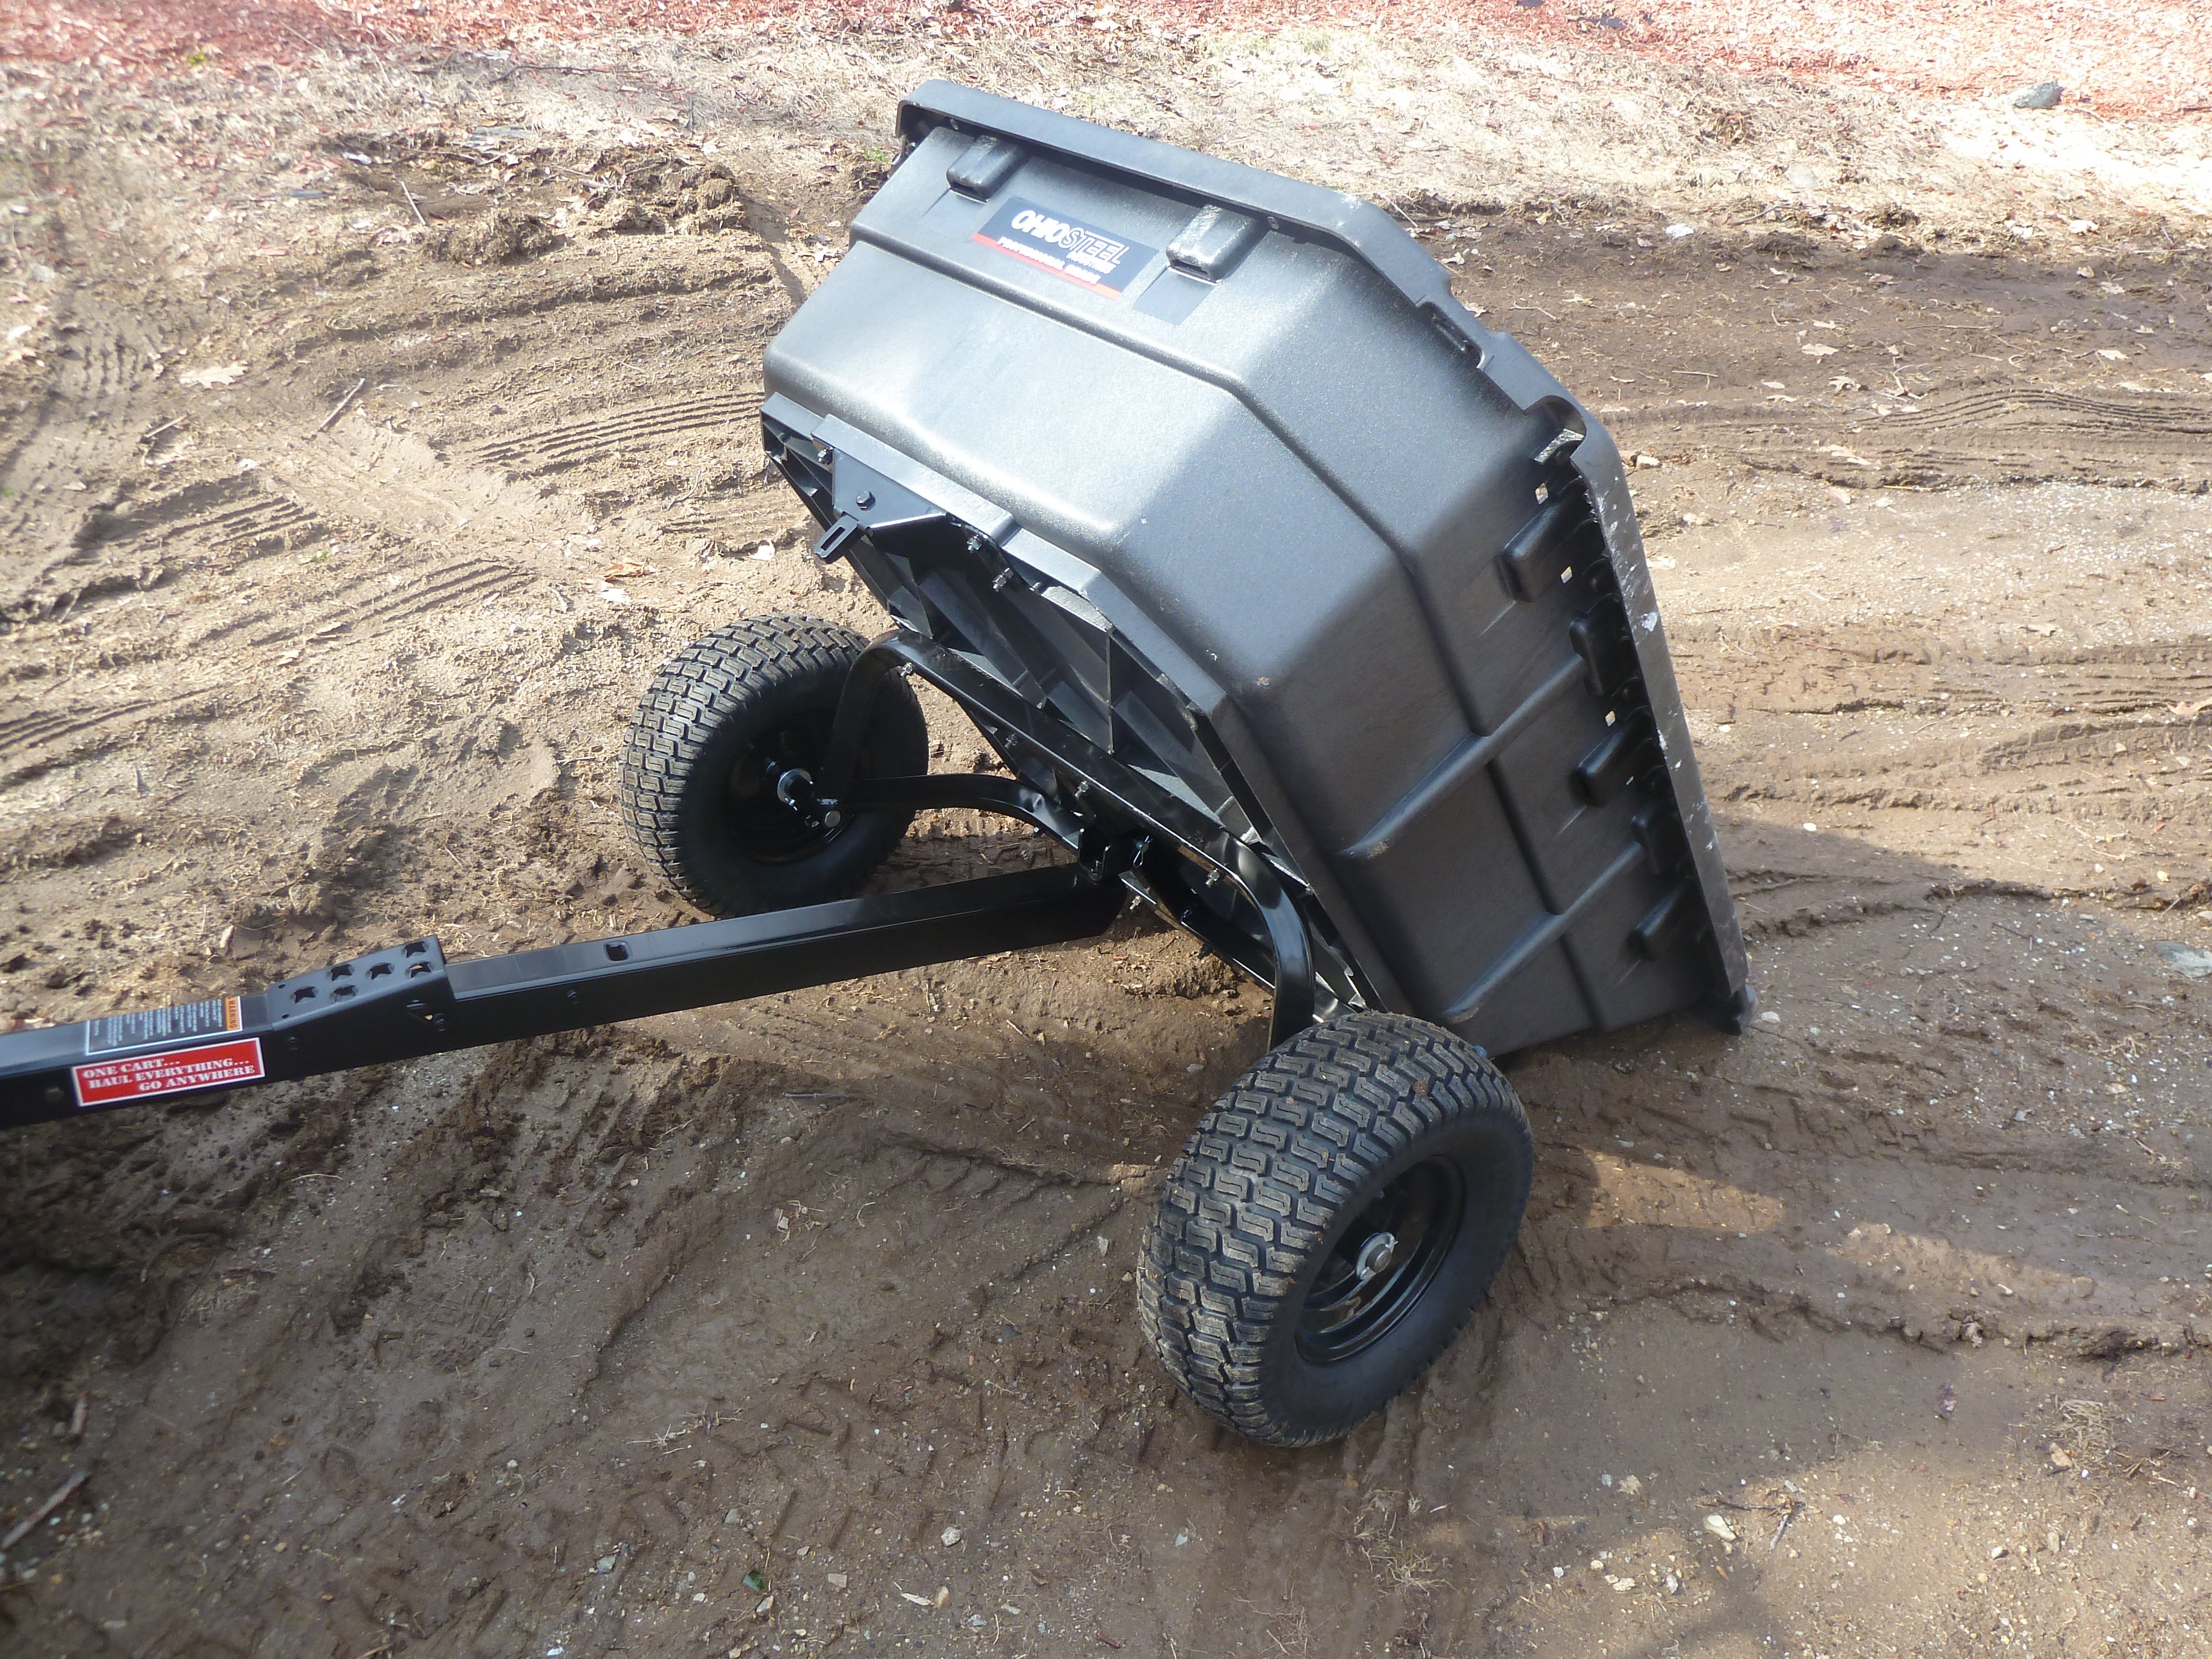 More information about "QuadBoss Swivel ATV Dump Cart Review"